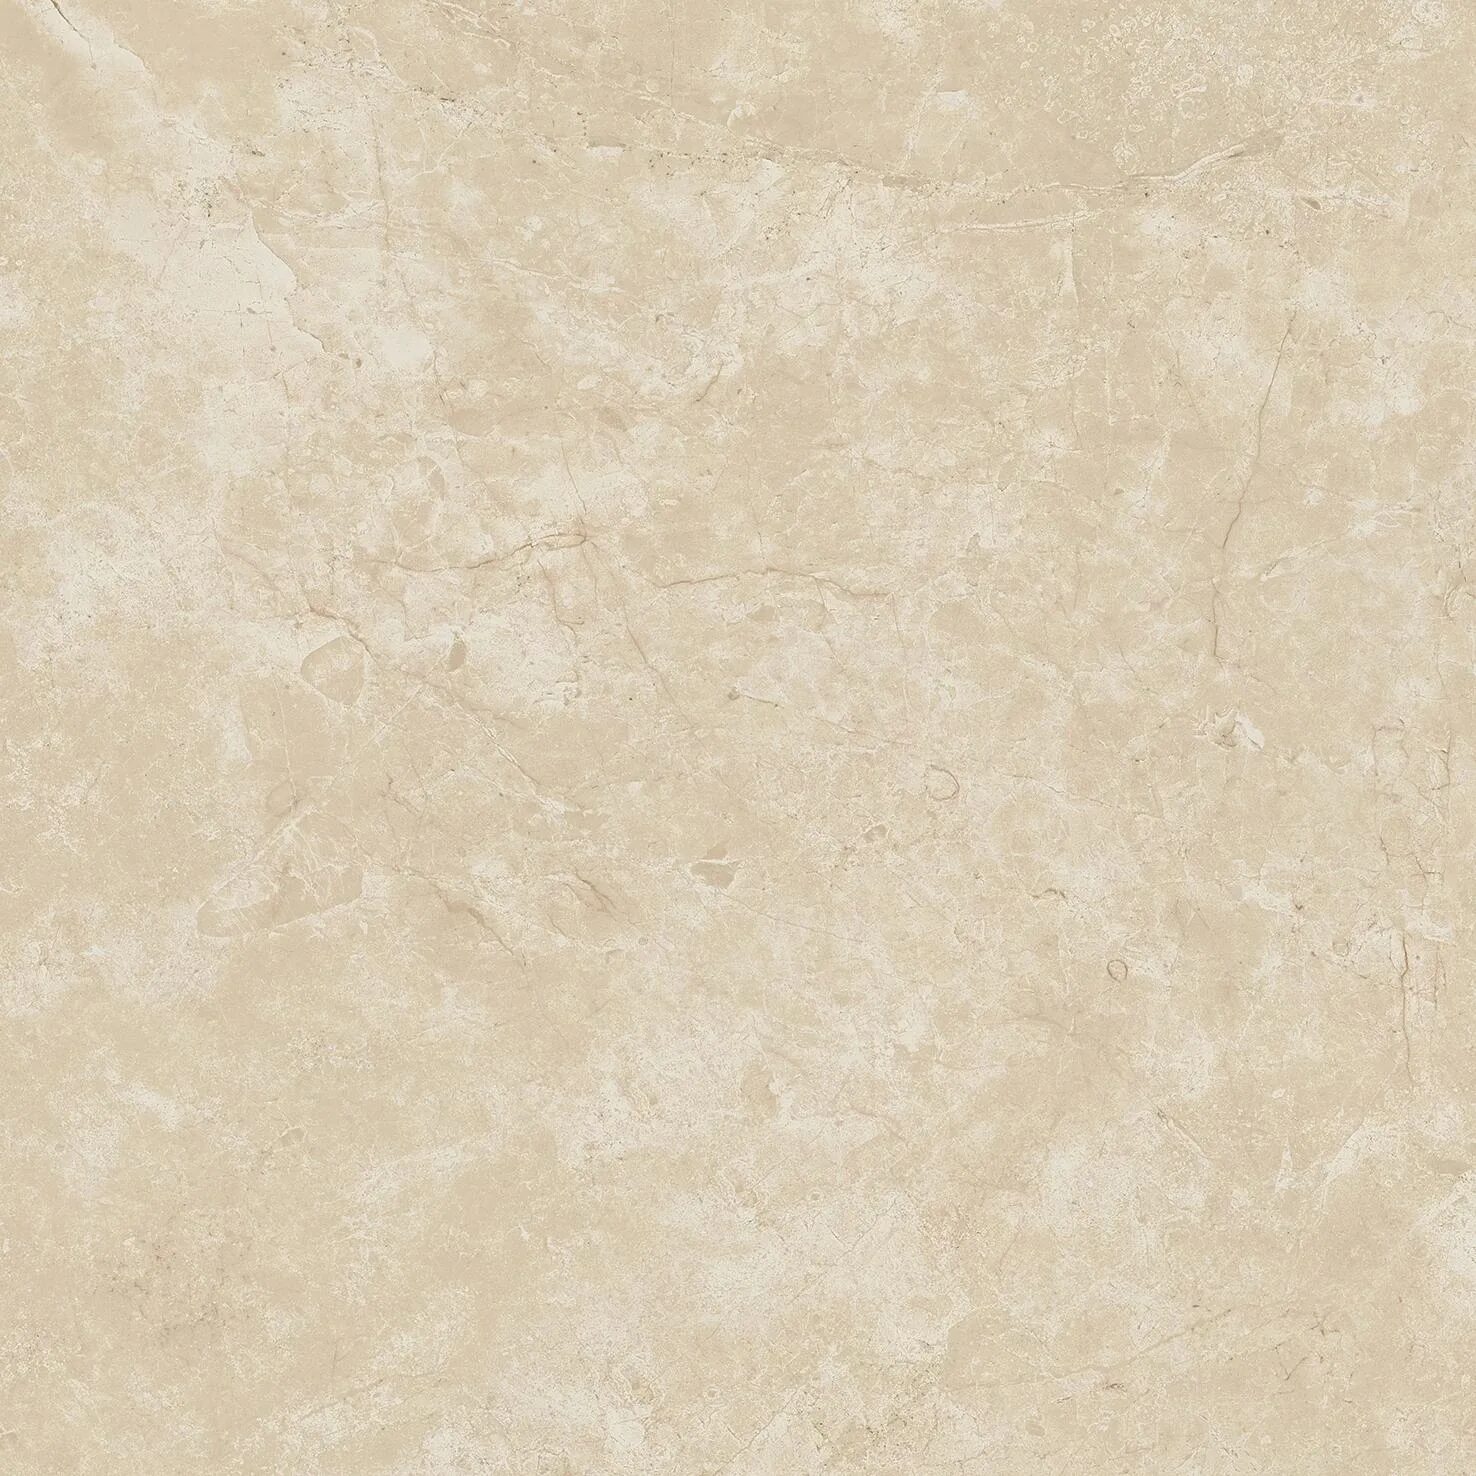 Stone cream. Crema Marfil 60x60. Престиж 60*60. Керамогранит крема Марфил. Плитка Columbia Sand.